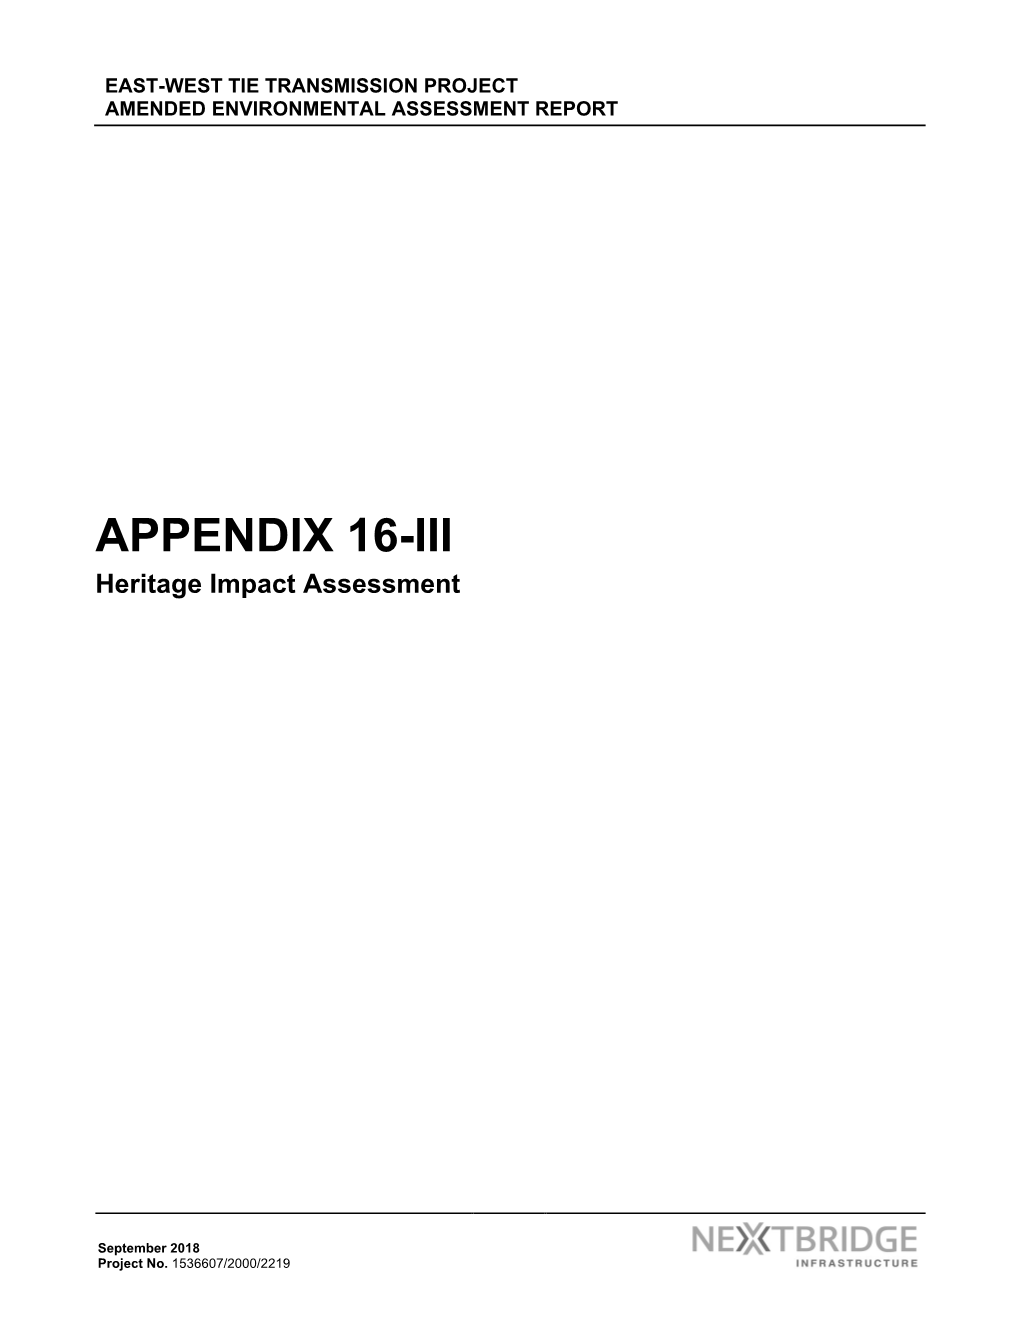 Appendix 16-III: Heritage Impact Assessment